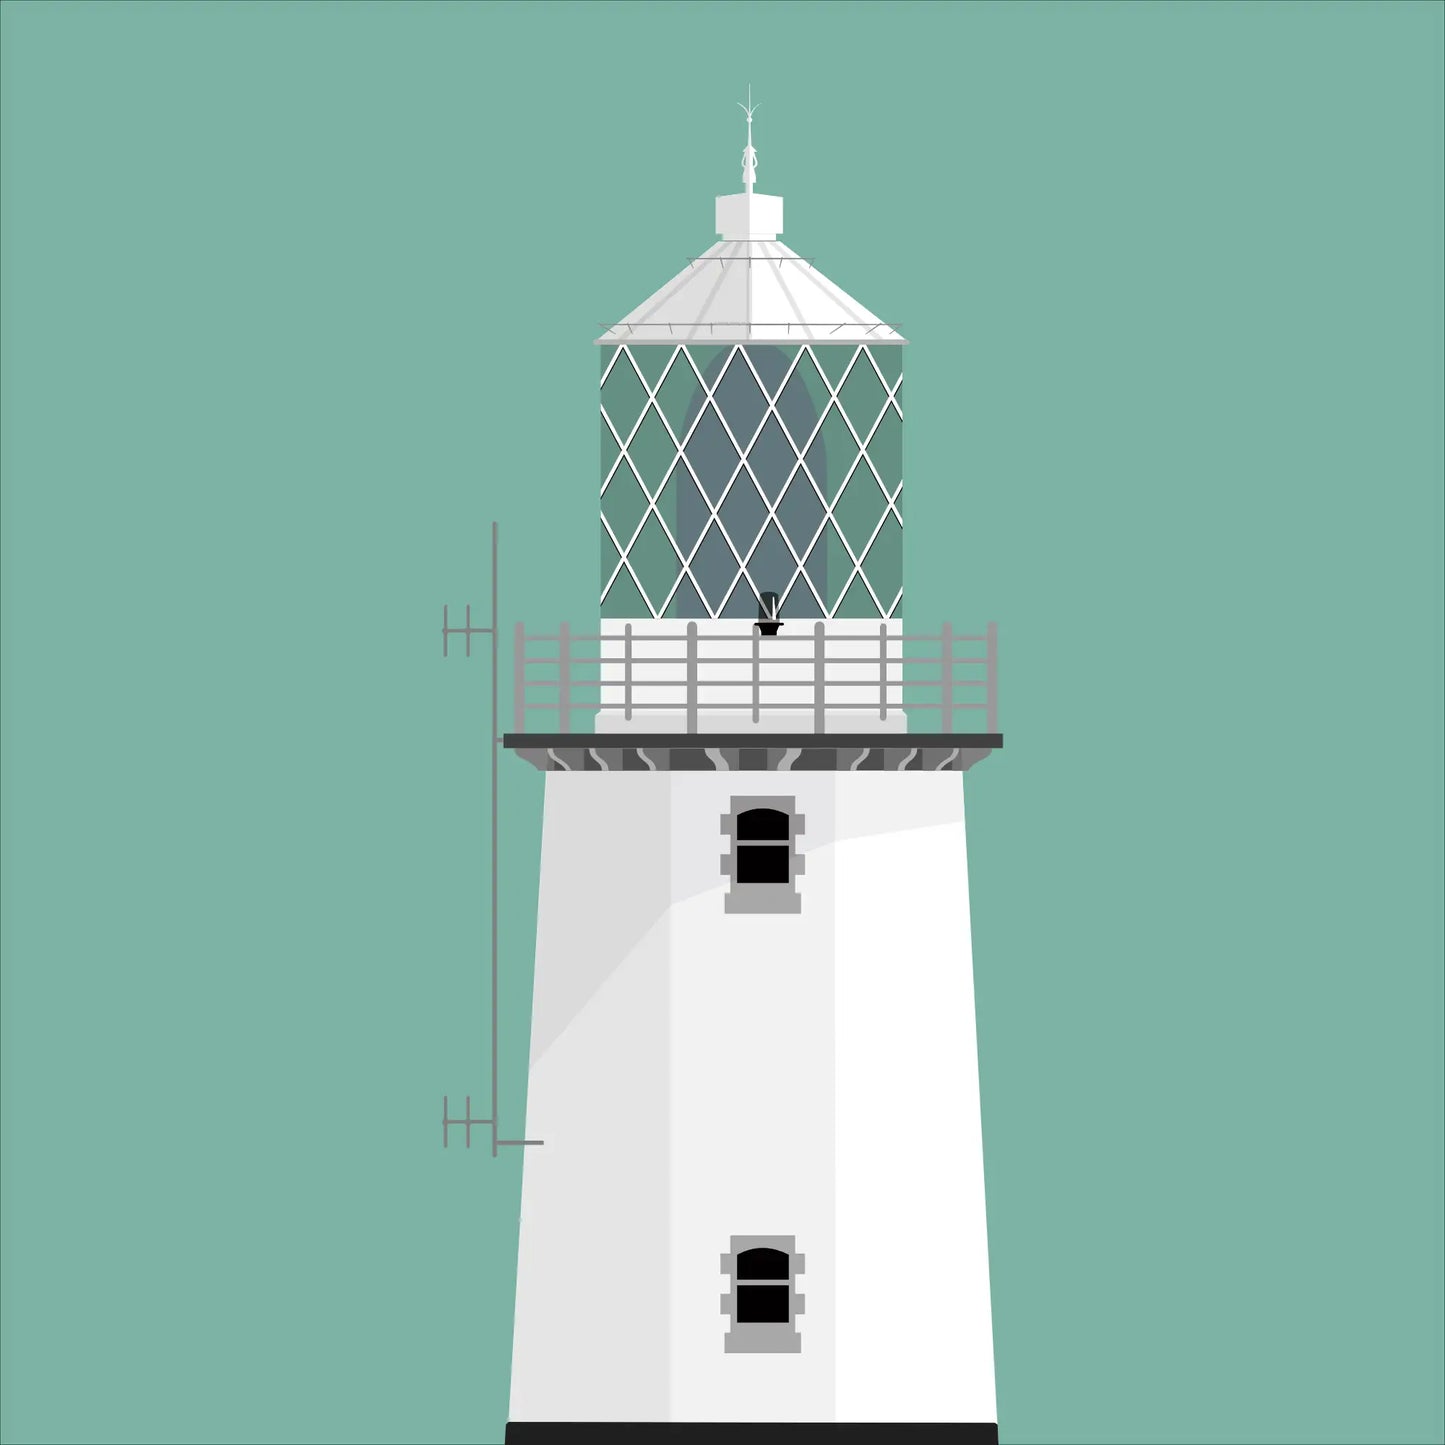 Illustration of Blackhead lighthouse on a white background inside light blue square.